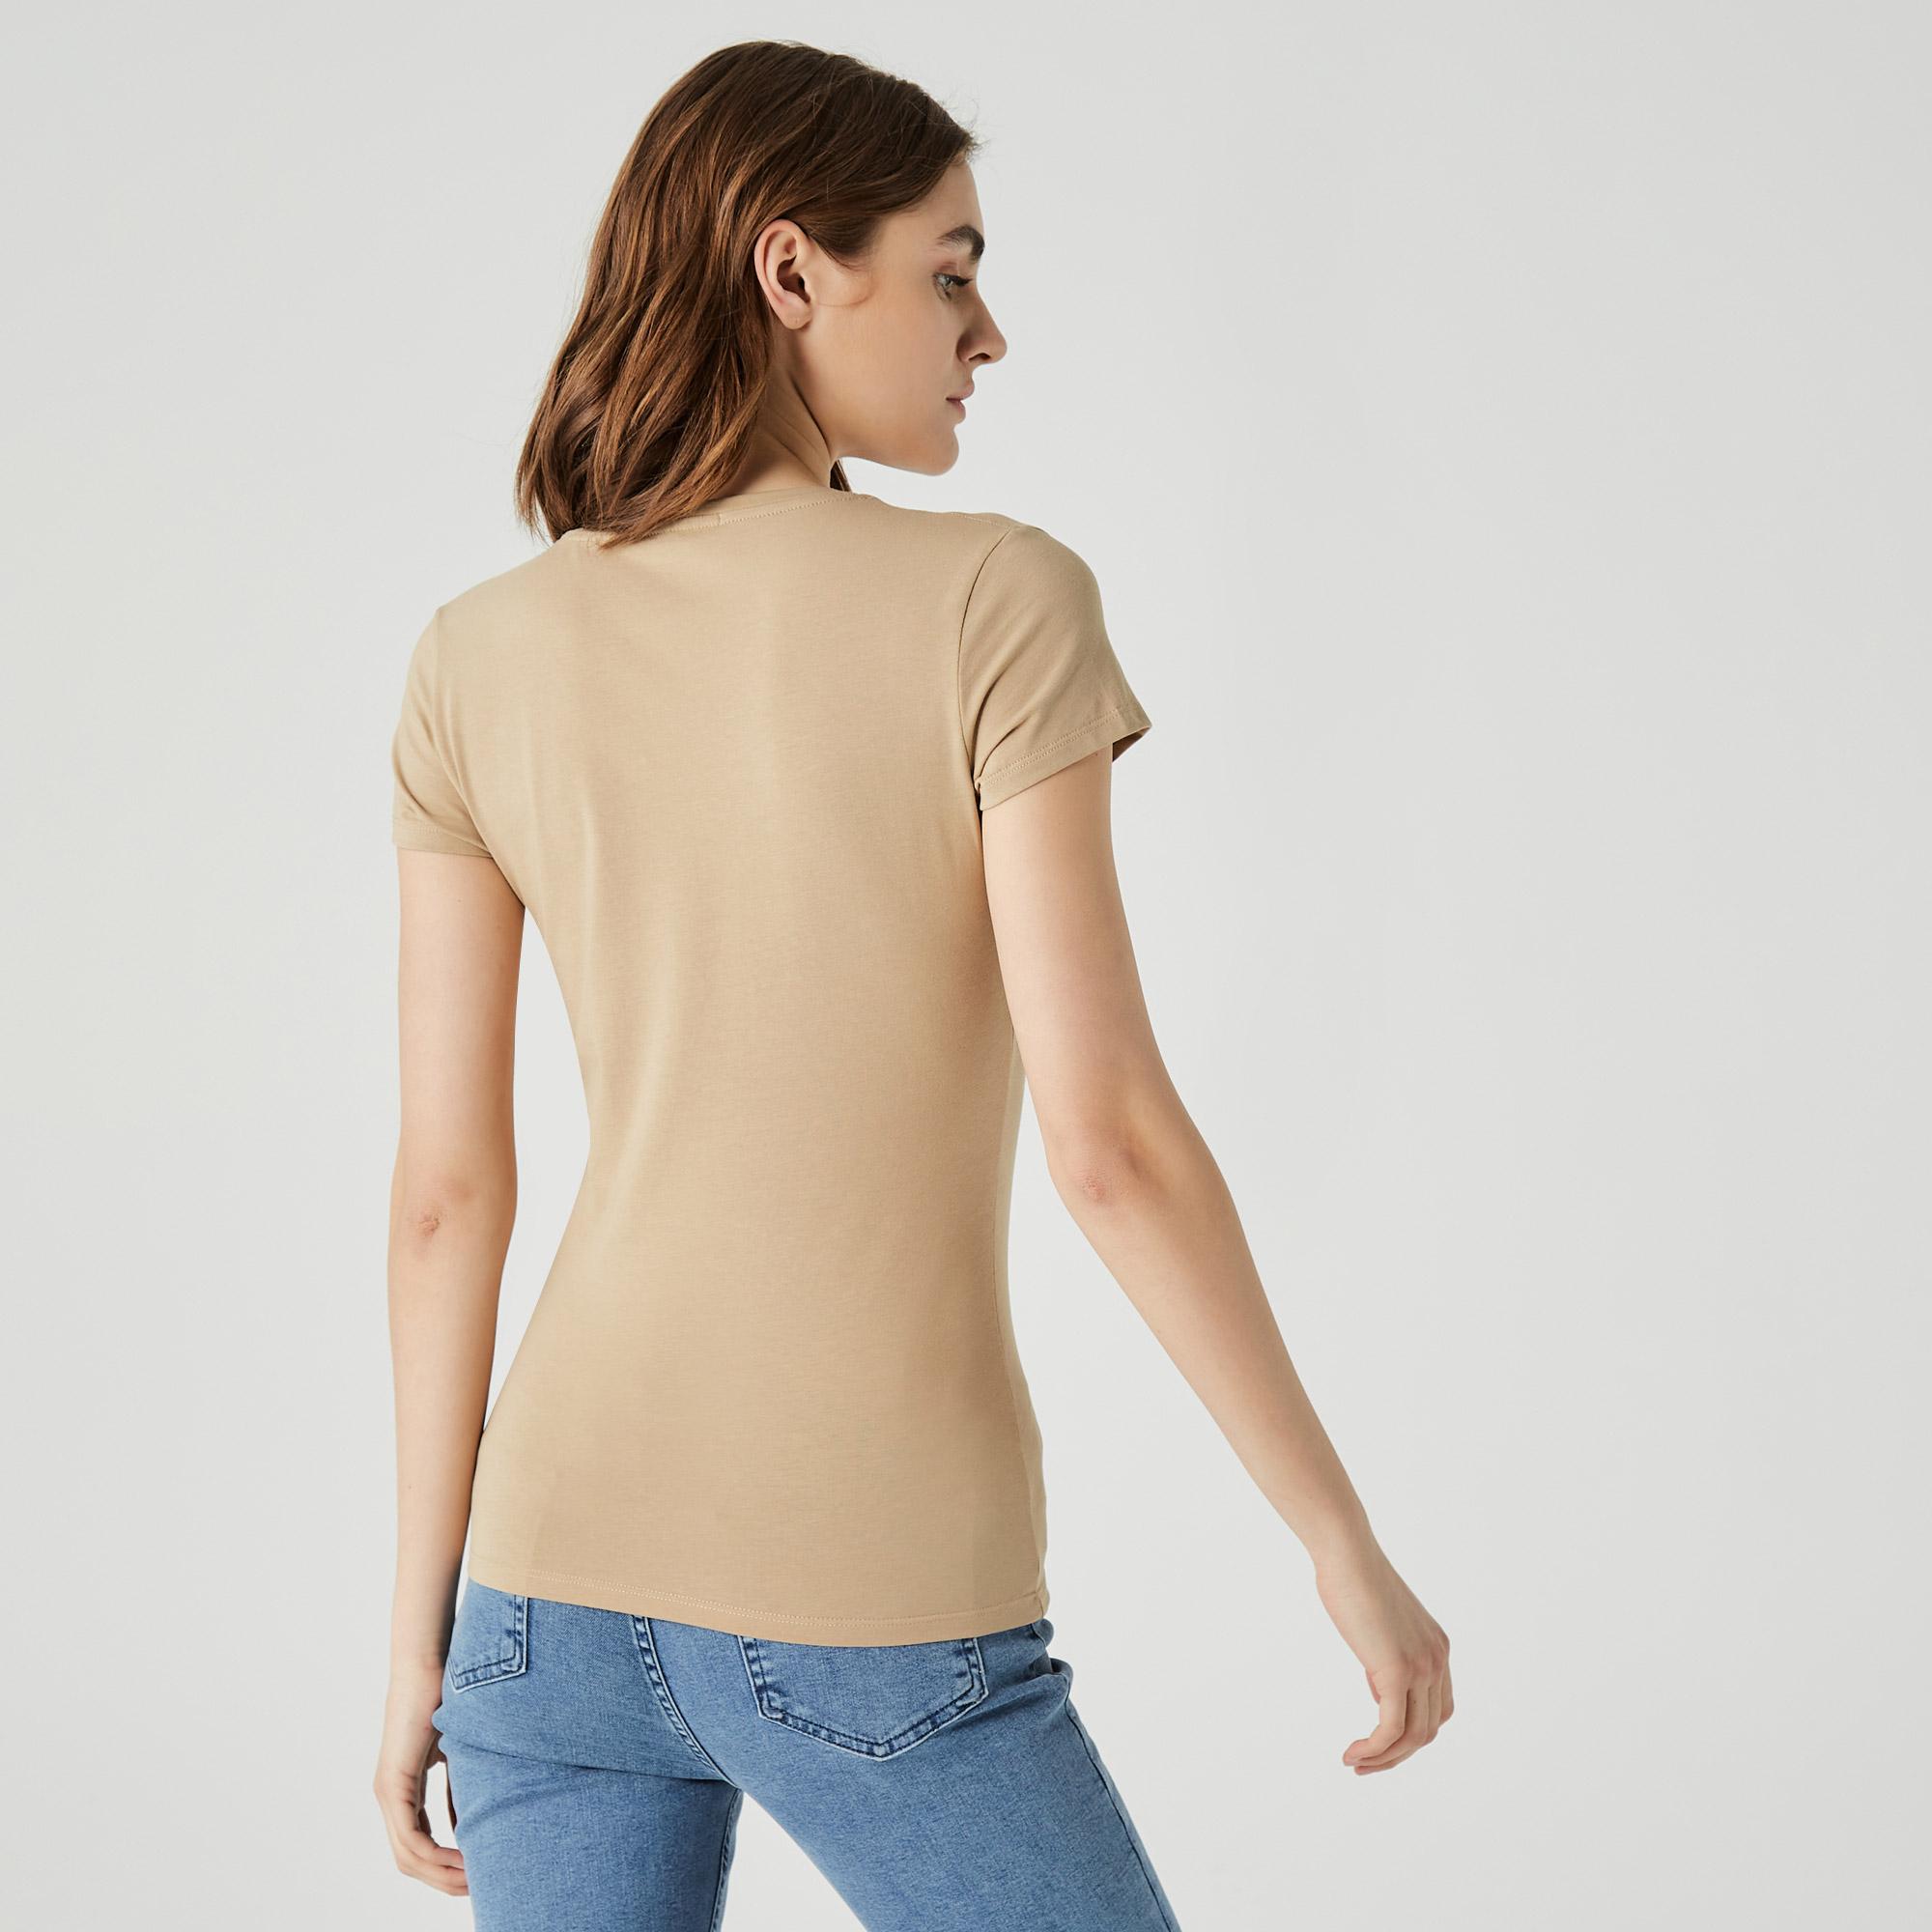 Lacoste Kadın Slim Fit V Yaka Bej T-Shirt. 3